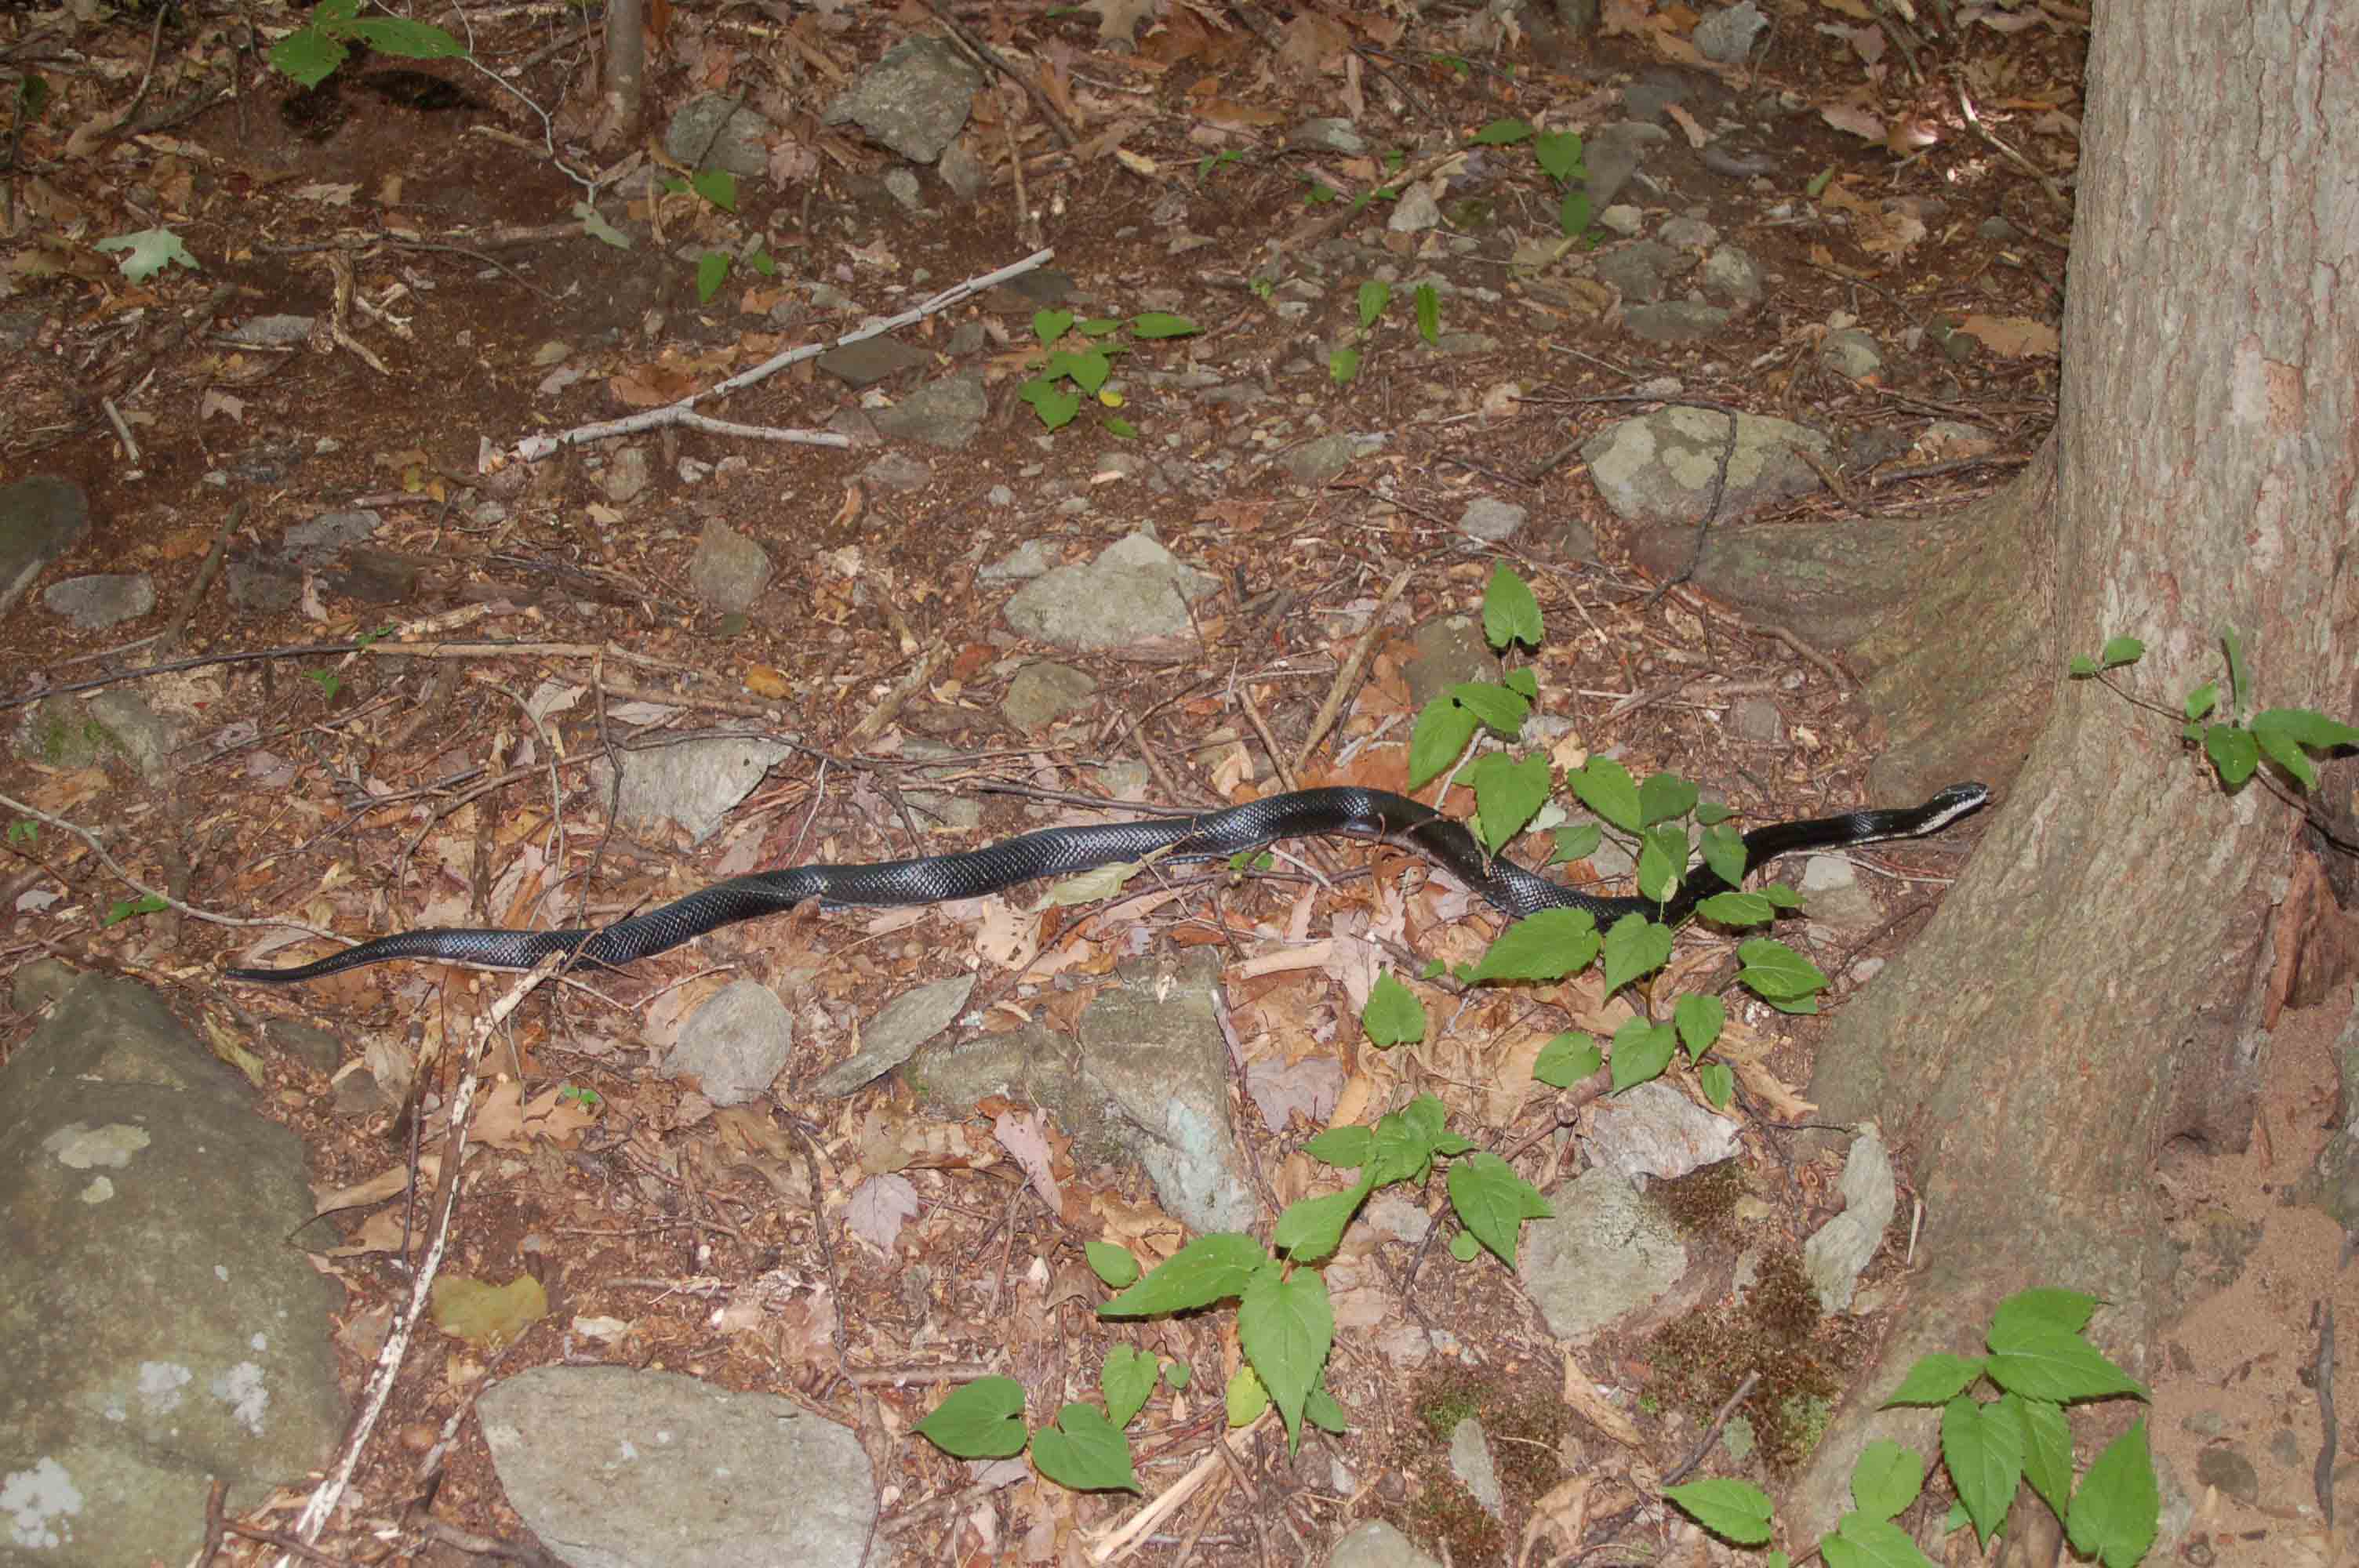 Black snake next to trail at switchbacks around mile 0.6.  Courtesy ideanna656@aol.com